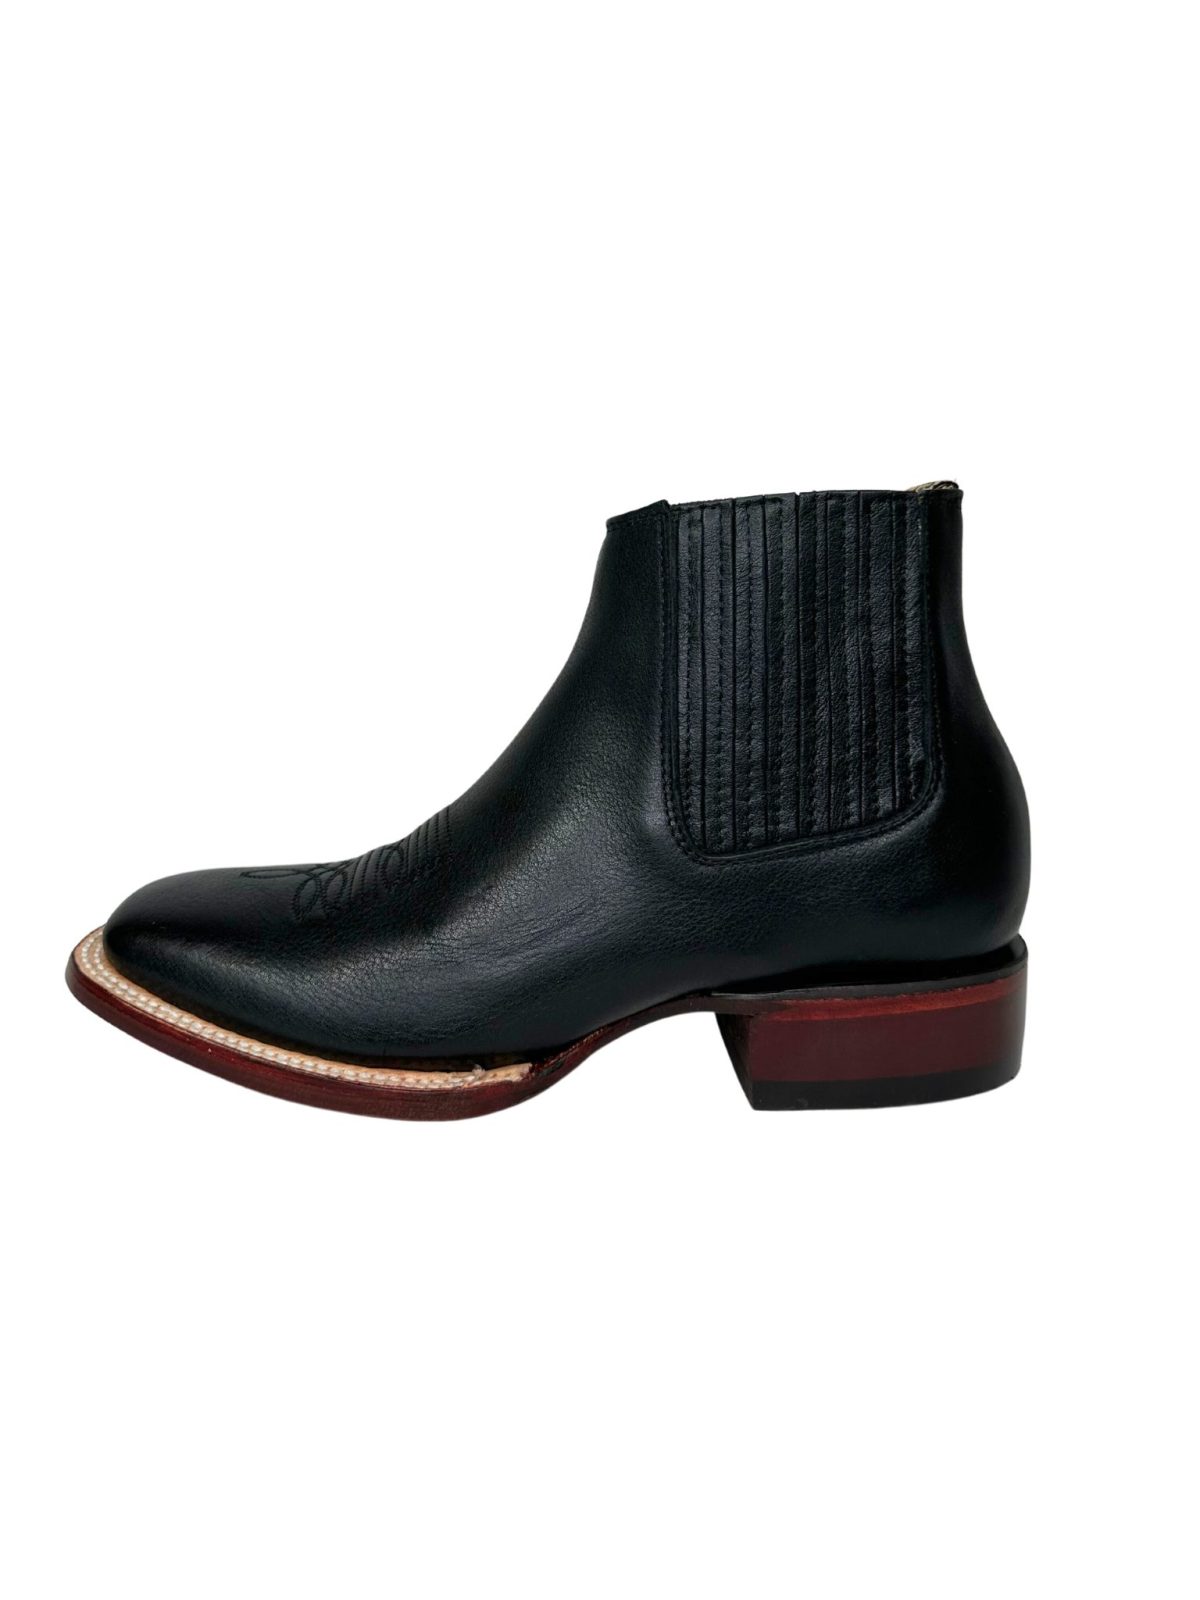 Wild West Men's Sqaure Toe Black Belmont Leather Short Boot